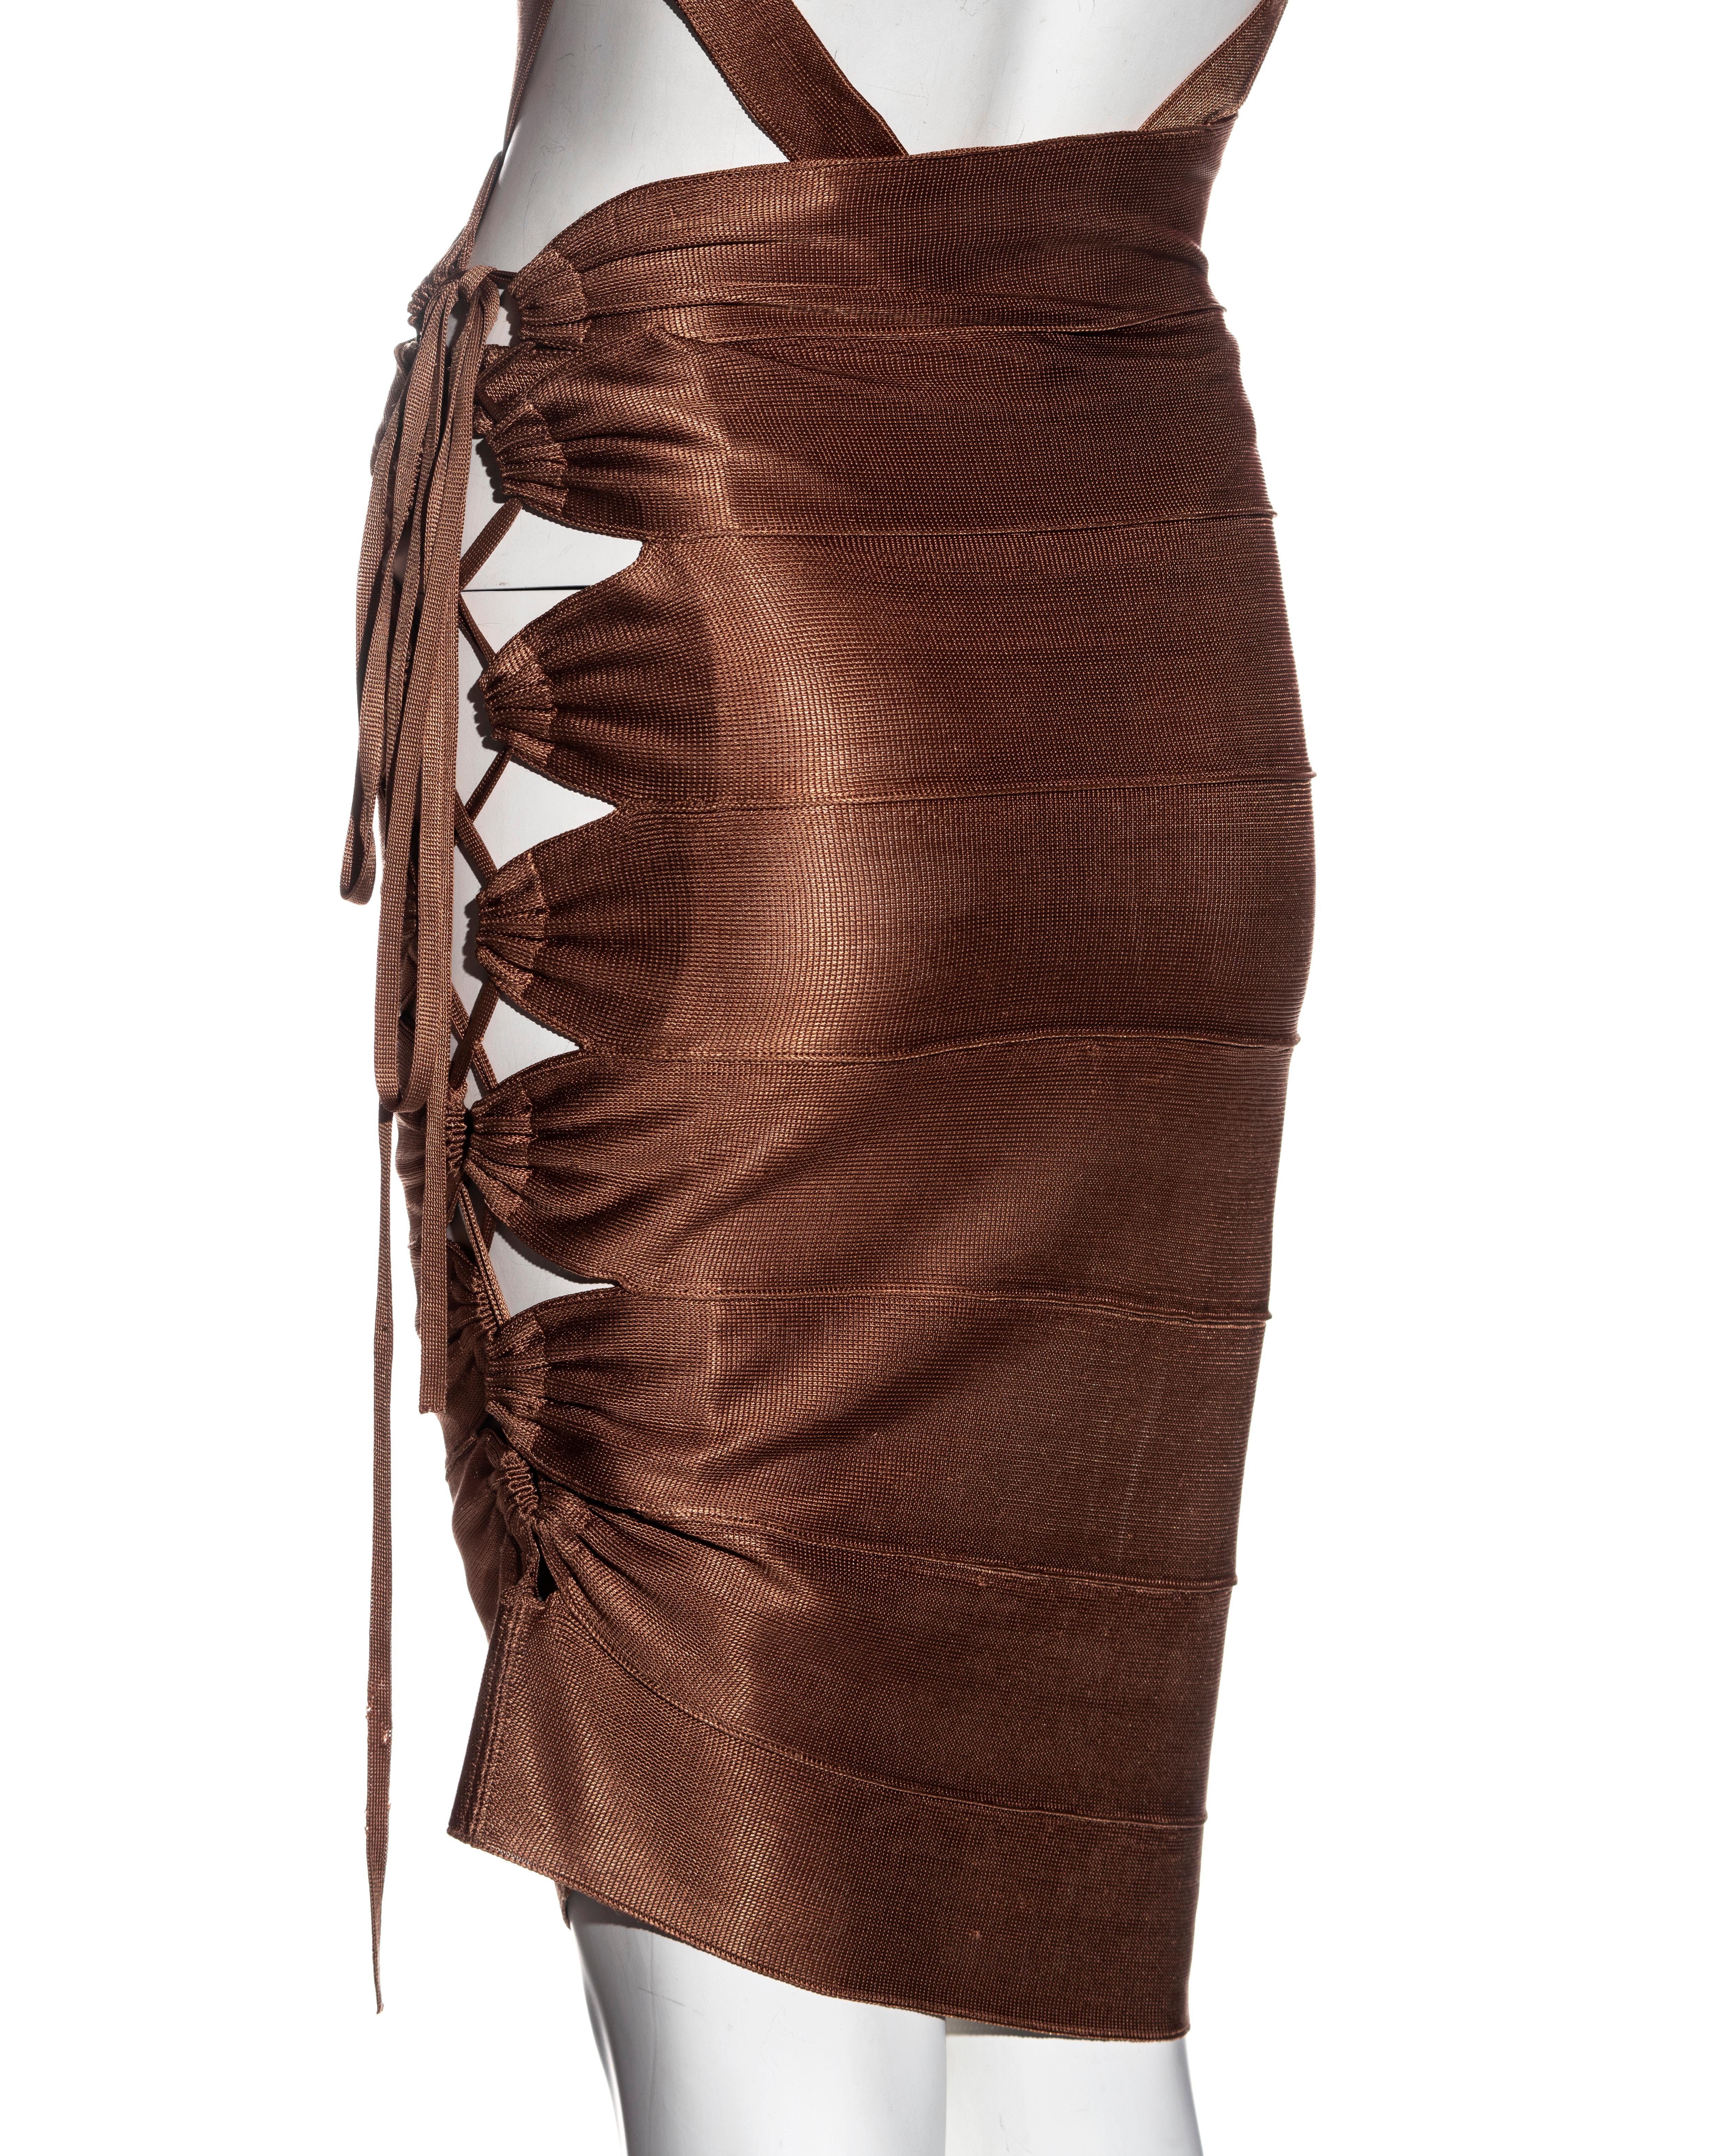 Azzedine Alaia bronze acetate knit bandage skirt and bodysuit set, ss 1986 2